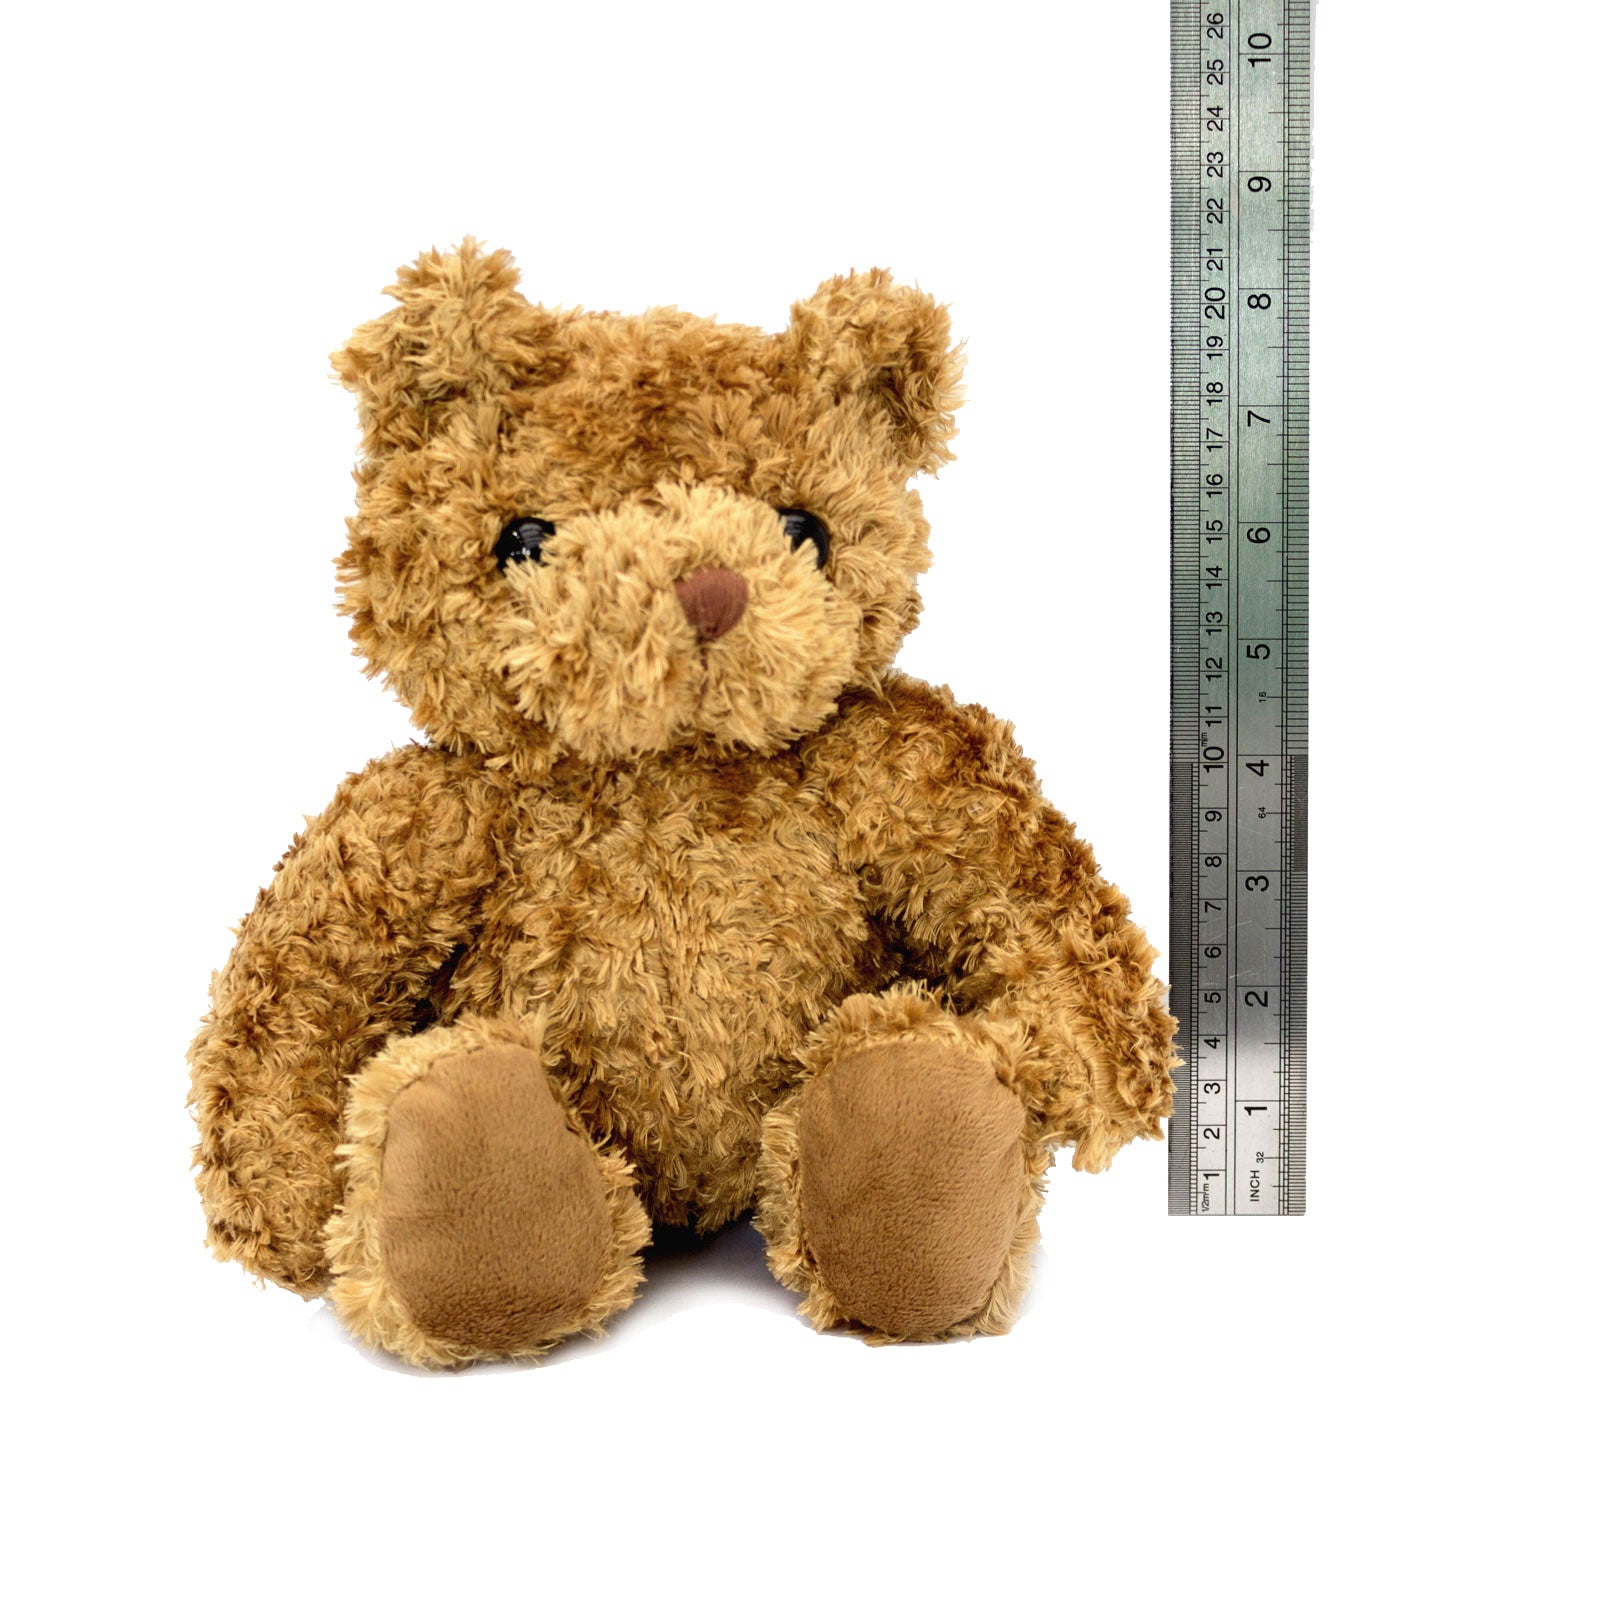 Get Well Soon Hameed - Teddy Bear